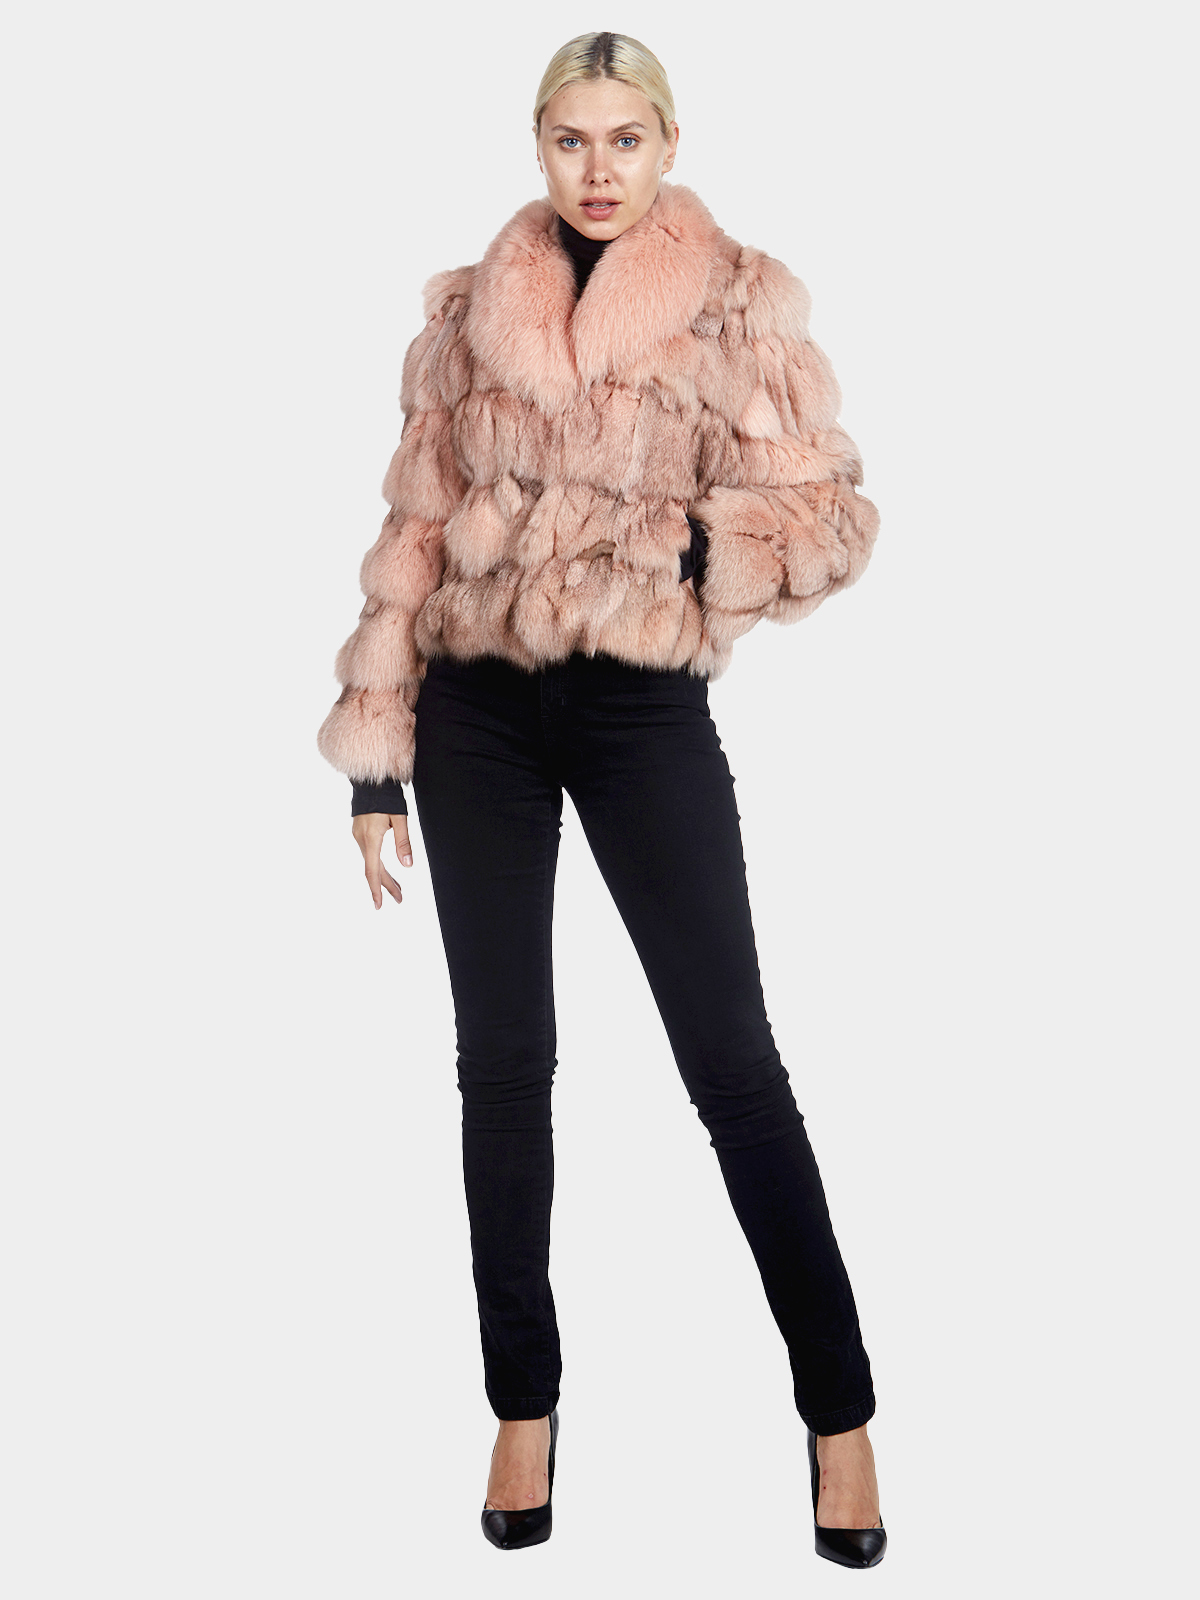 Women's Genuine Fox Fur Coat - Winter Lamb Fur Jacket With Turn-down Collar